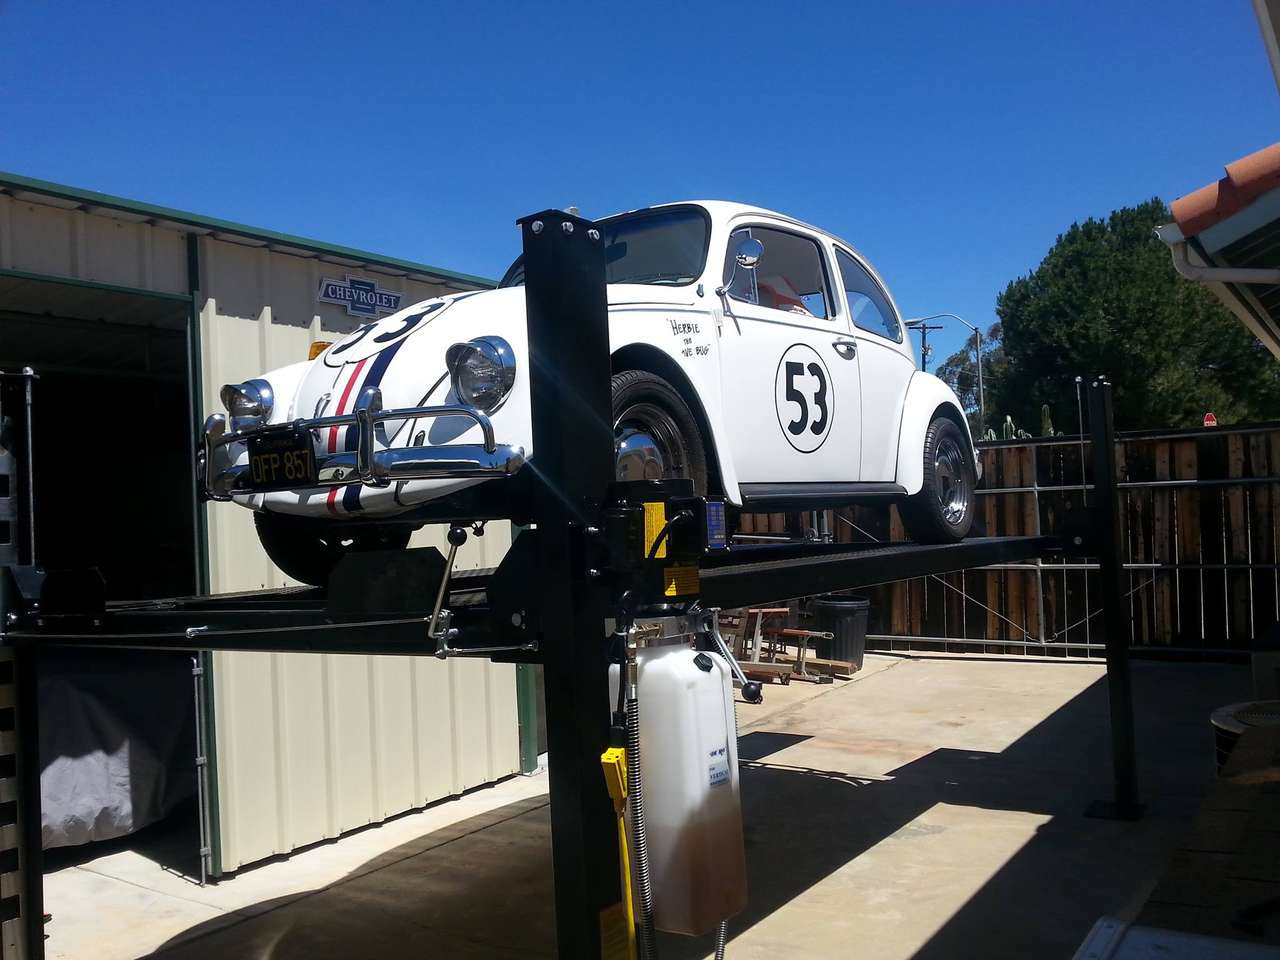 Herbie The Love Bug pussel online från foto